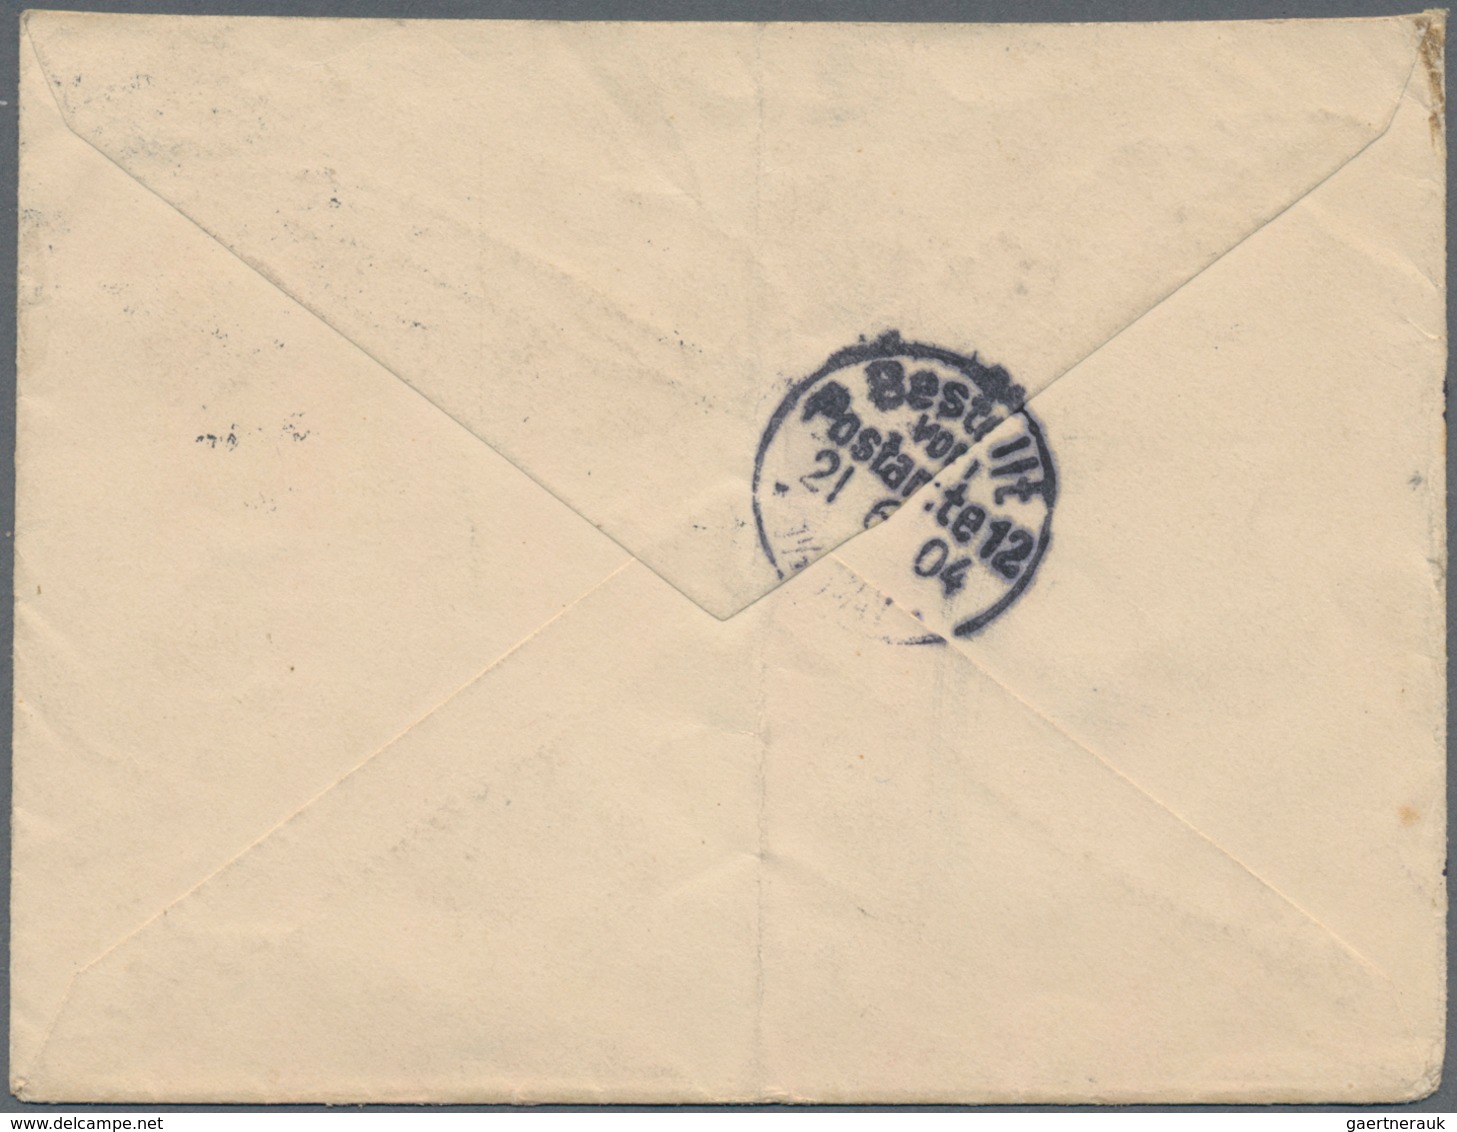 Vereinigte Staaten Von Amerika: 1904, Pictured Cover With Single Franking 5c. Blue McKinley From For - Briefe U. Dokumente